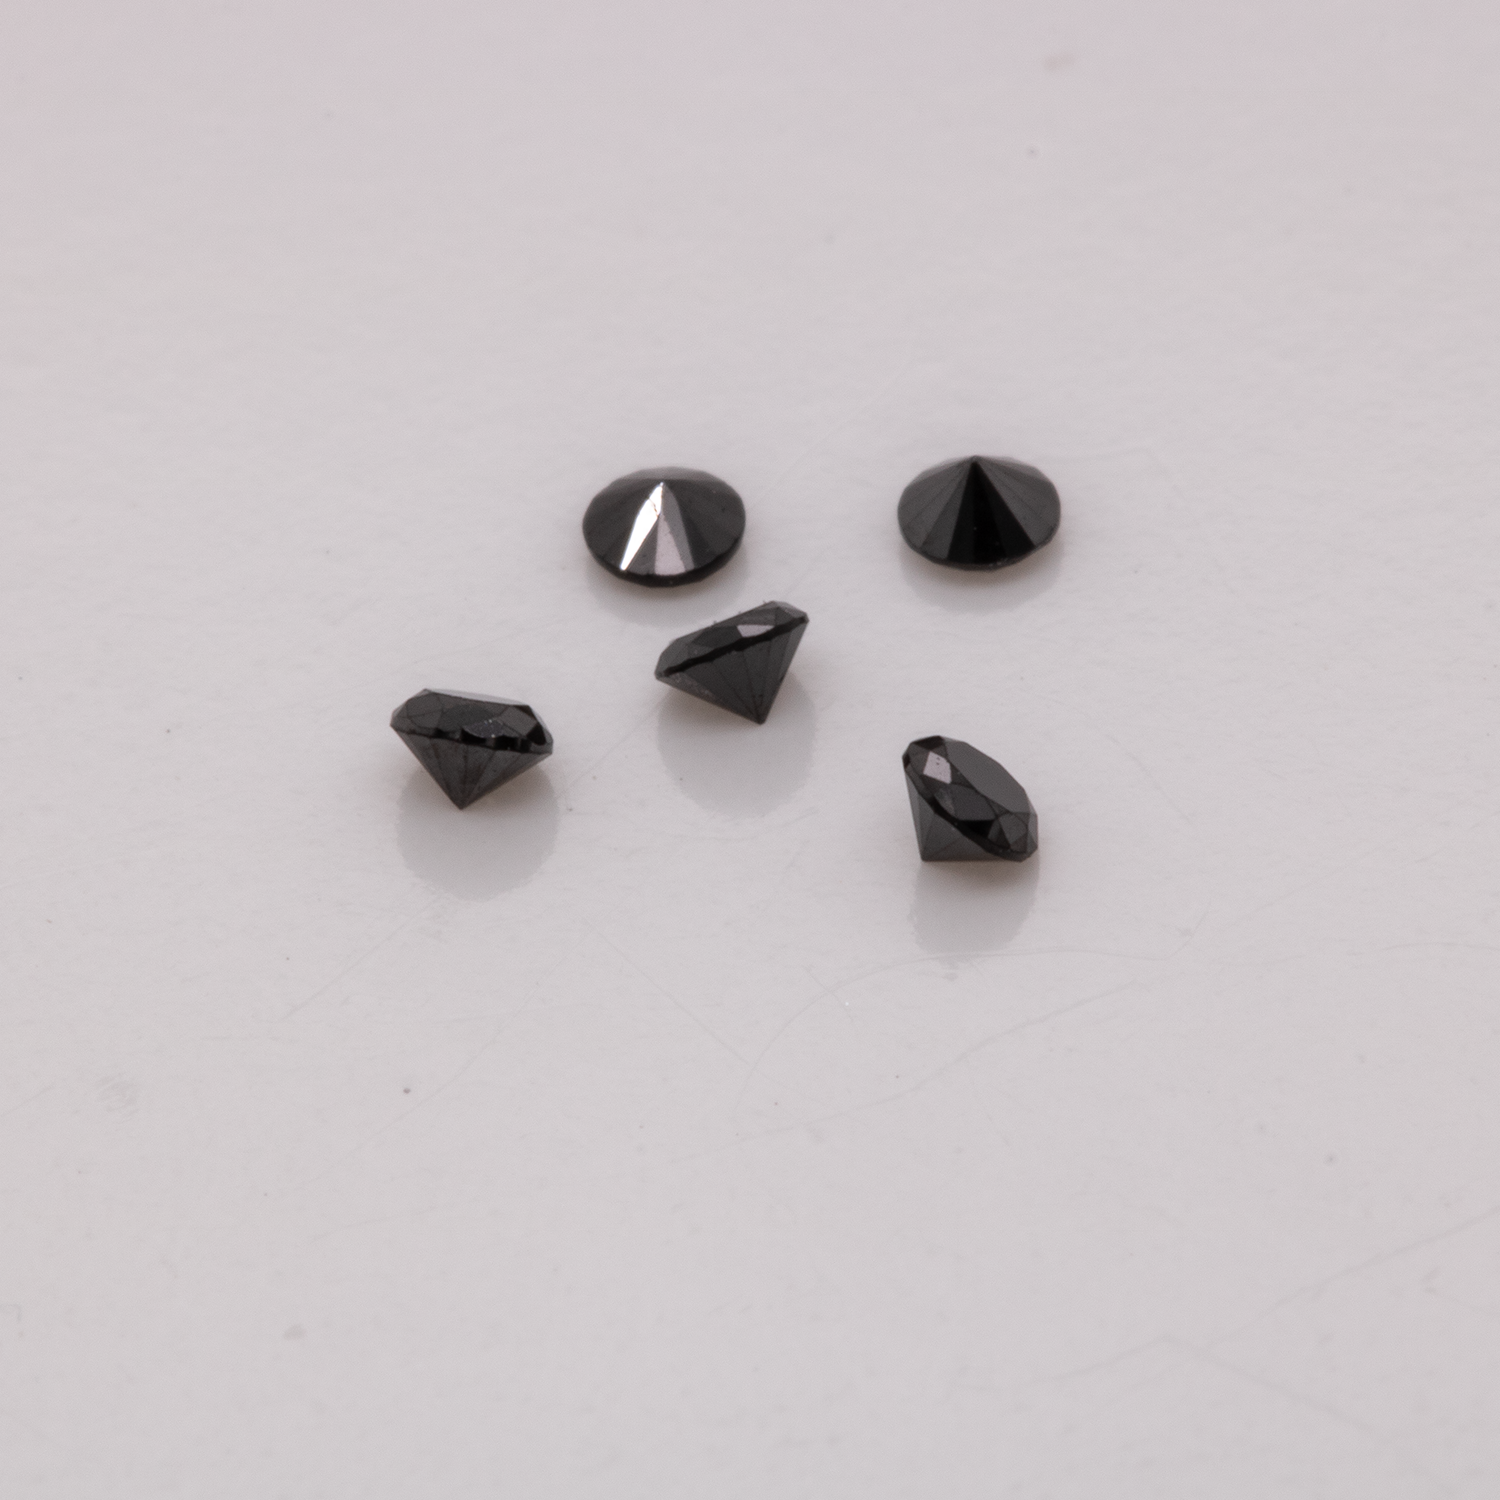 Diamond - black, non-transparent, round, 1.5 mm, approx. 0.015 cts, No. D11058